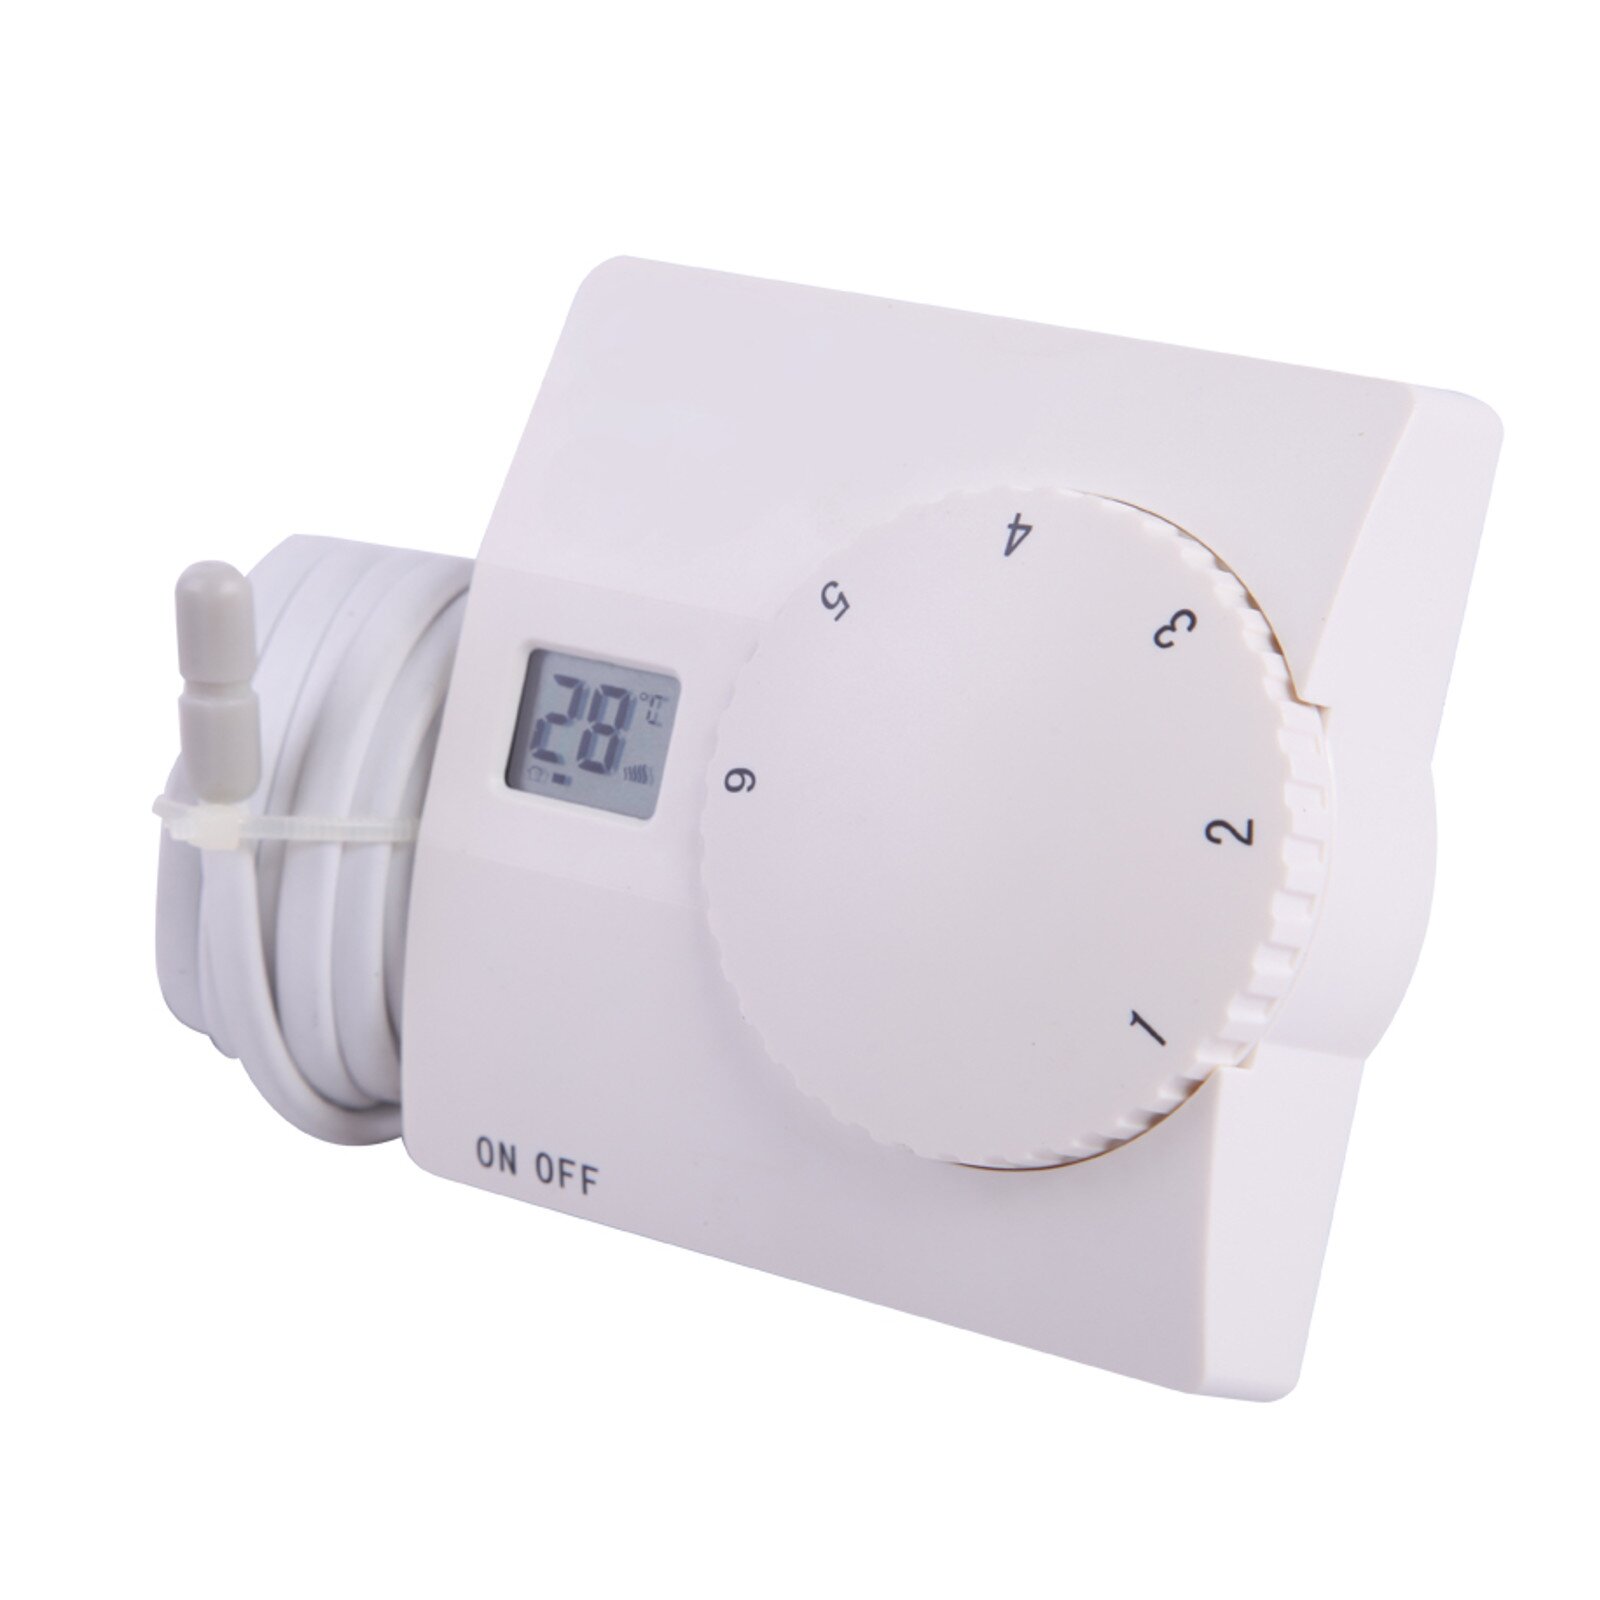 SAS816 Room thermostat with floor sensor